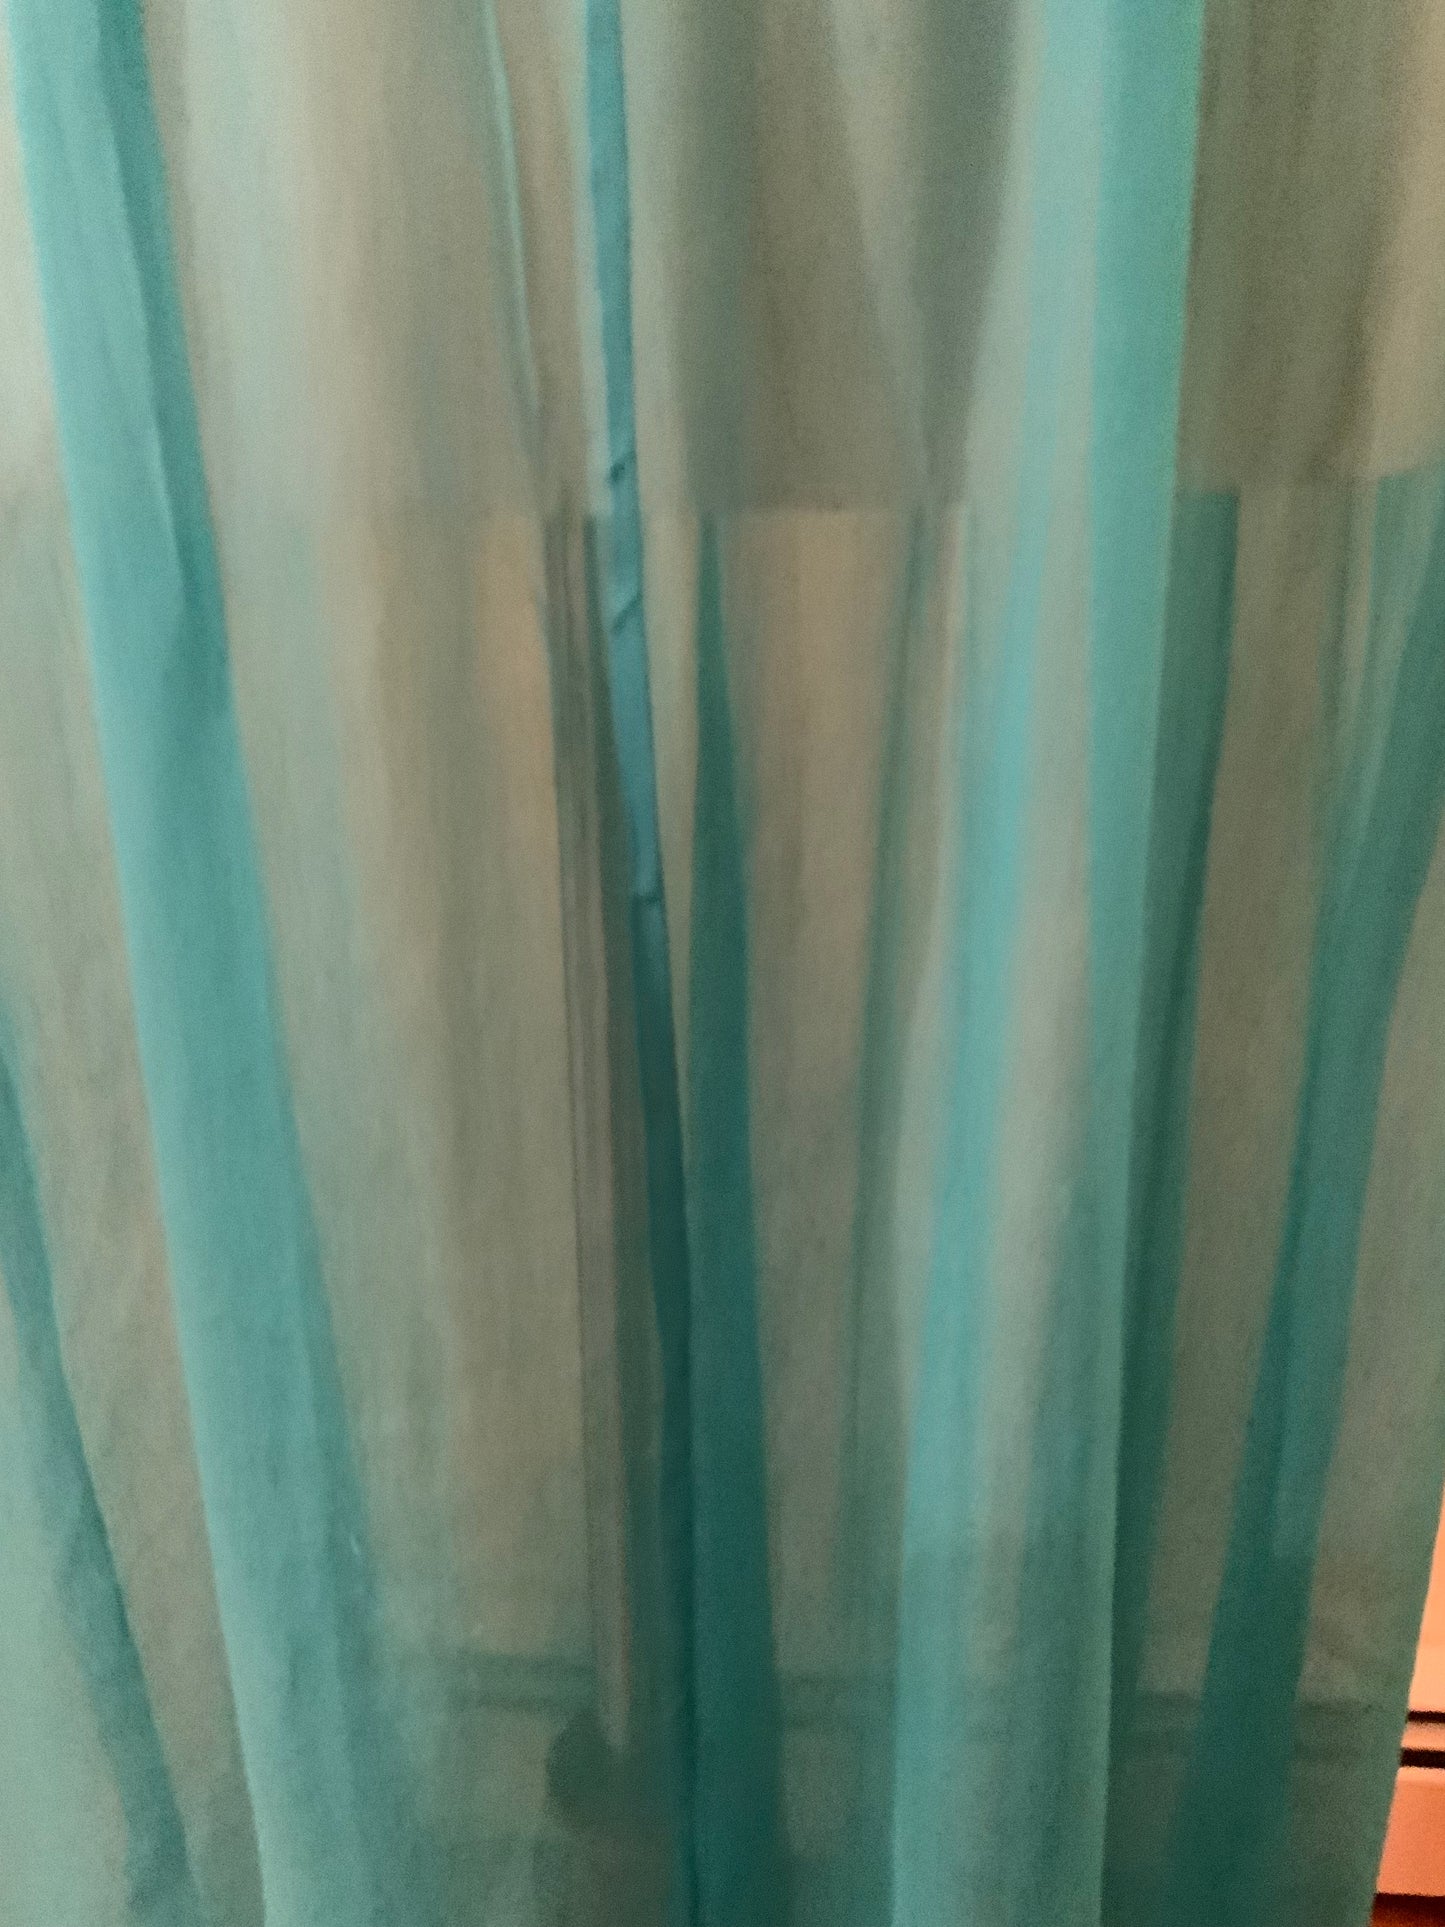 Turquoise Sheer Dress - 30s